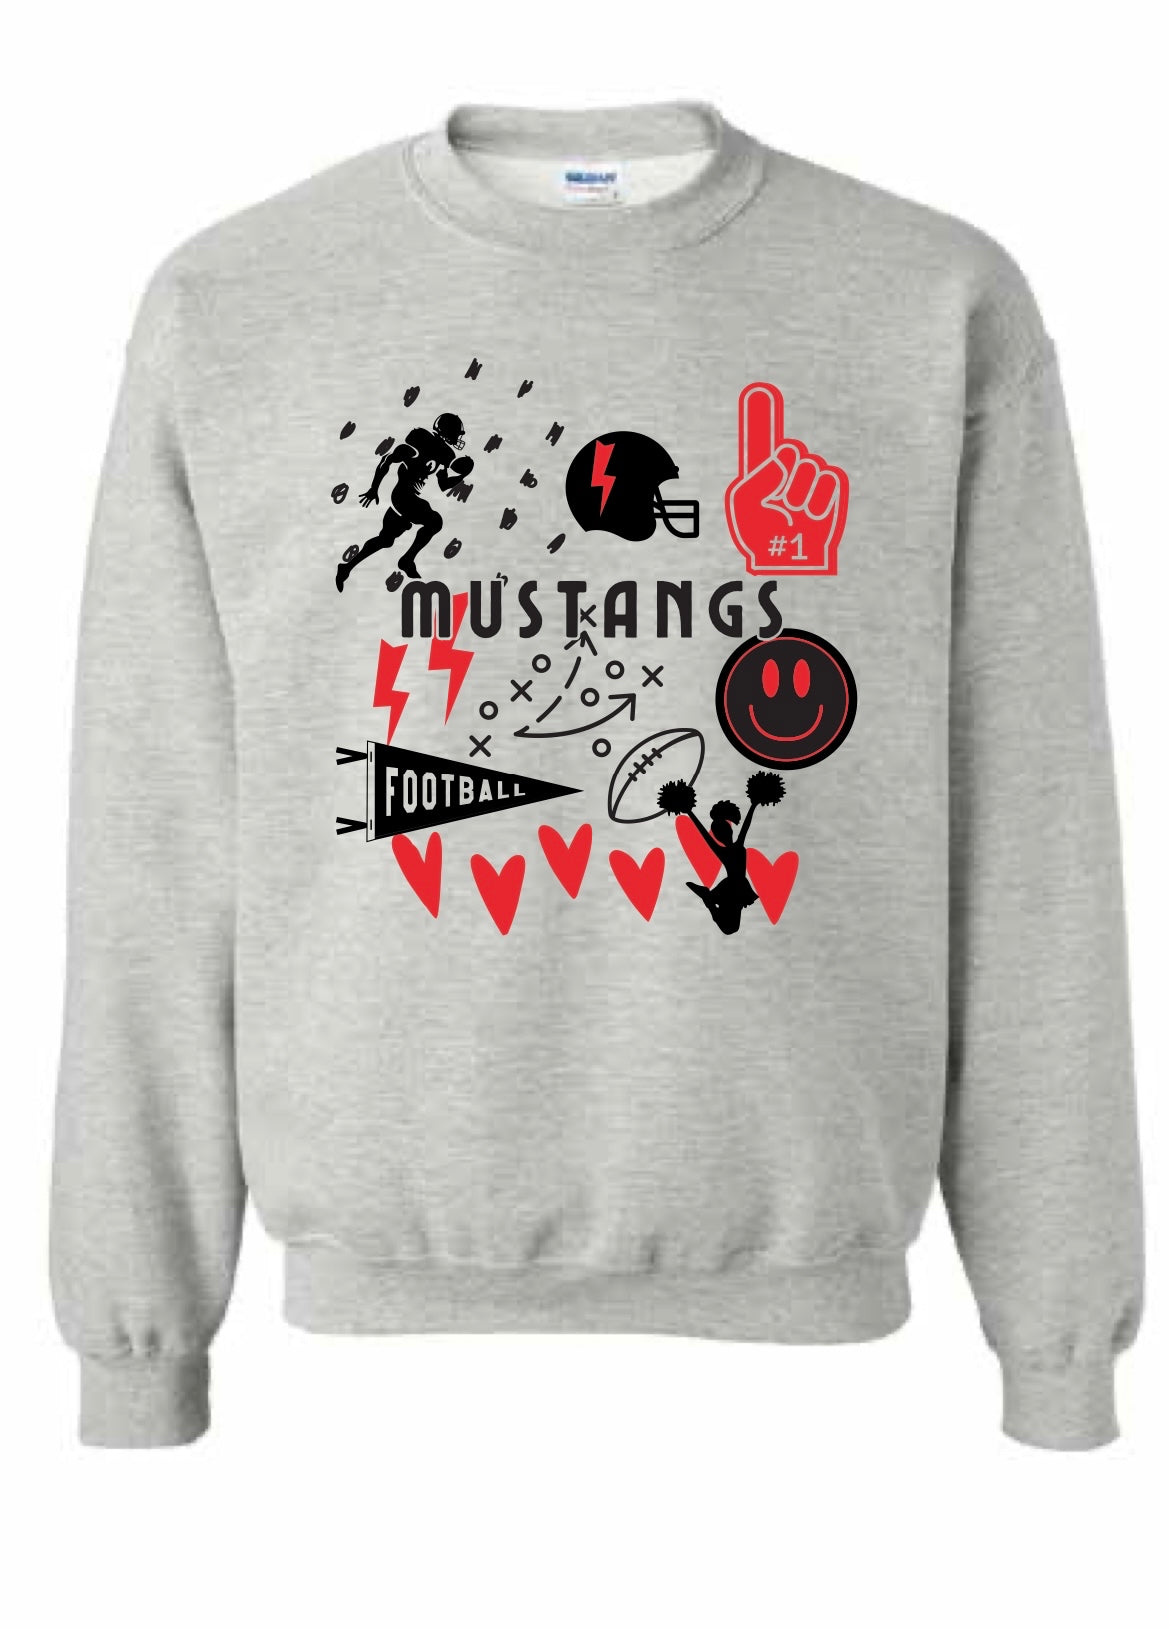 MUSTANGS collage sweatshirt